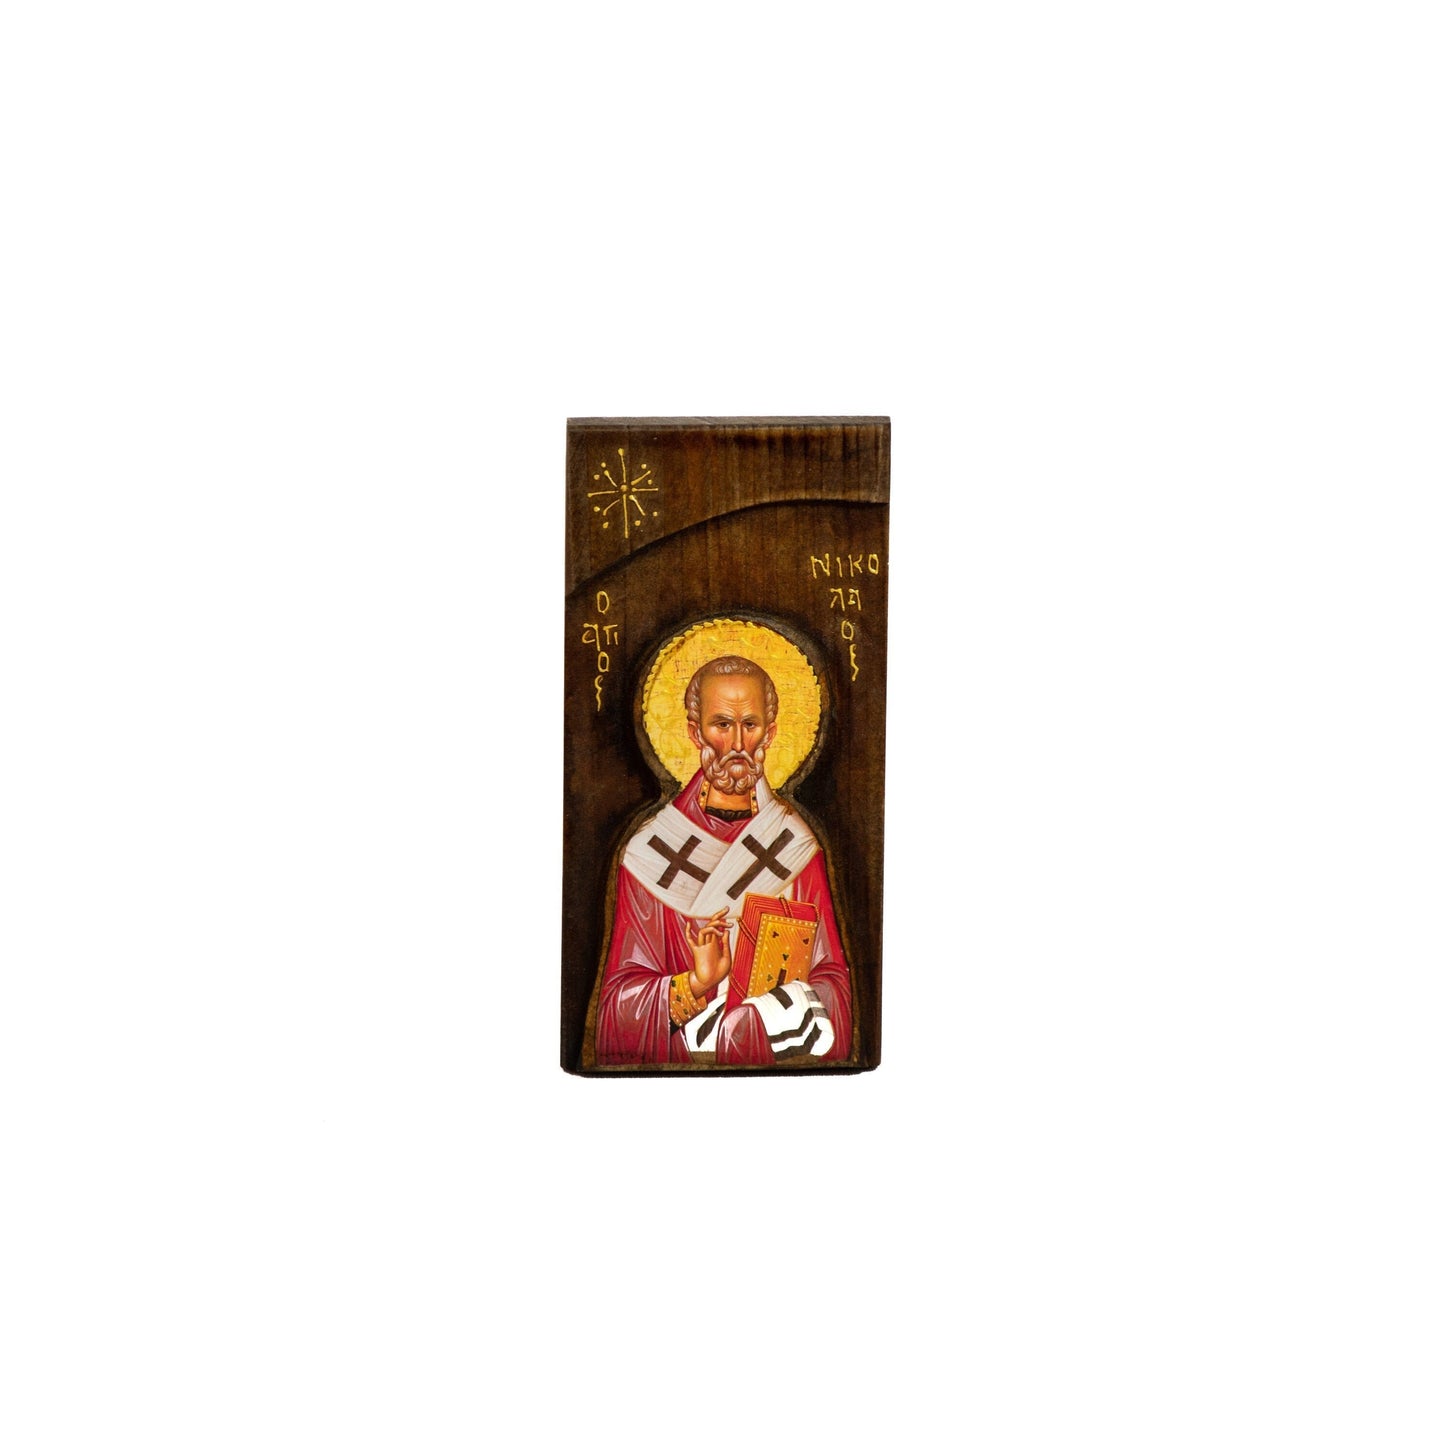 Saint Nicholas icon, Handmade Greek Orthodox icon of St Nick, Byzantine art wall hanging icon wood plaque 20x10cm, religious decor TheHolyArt